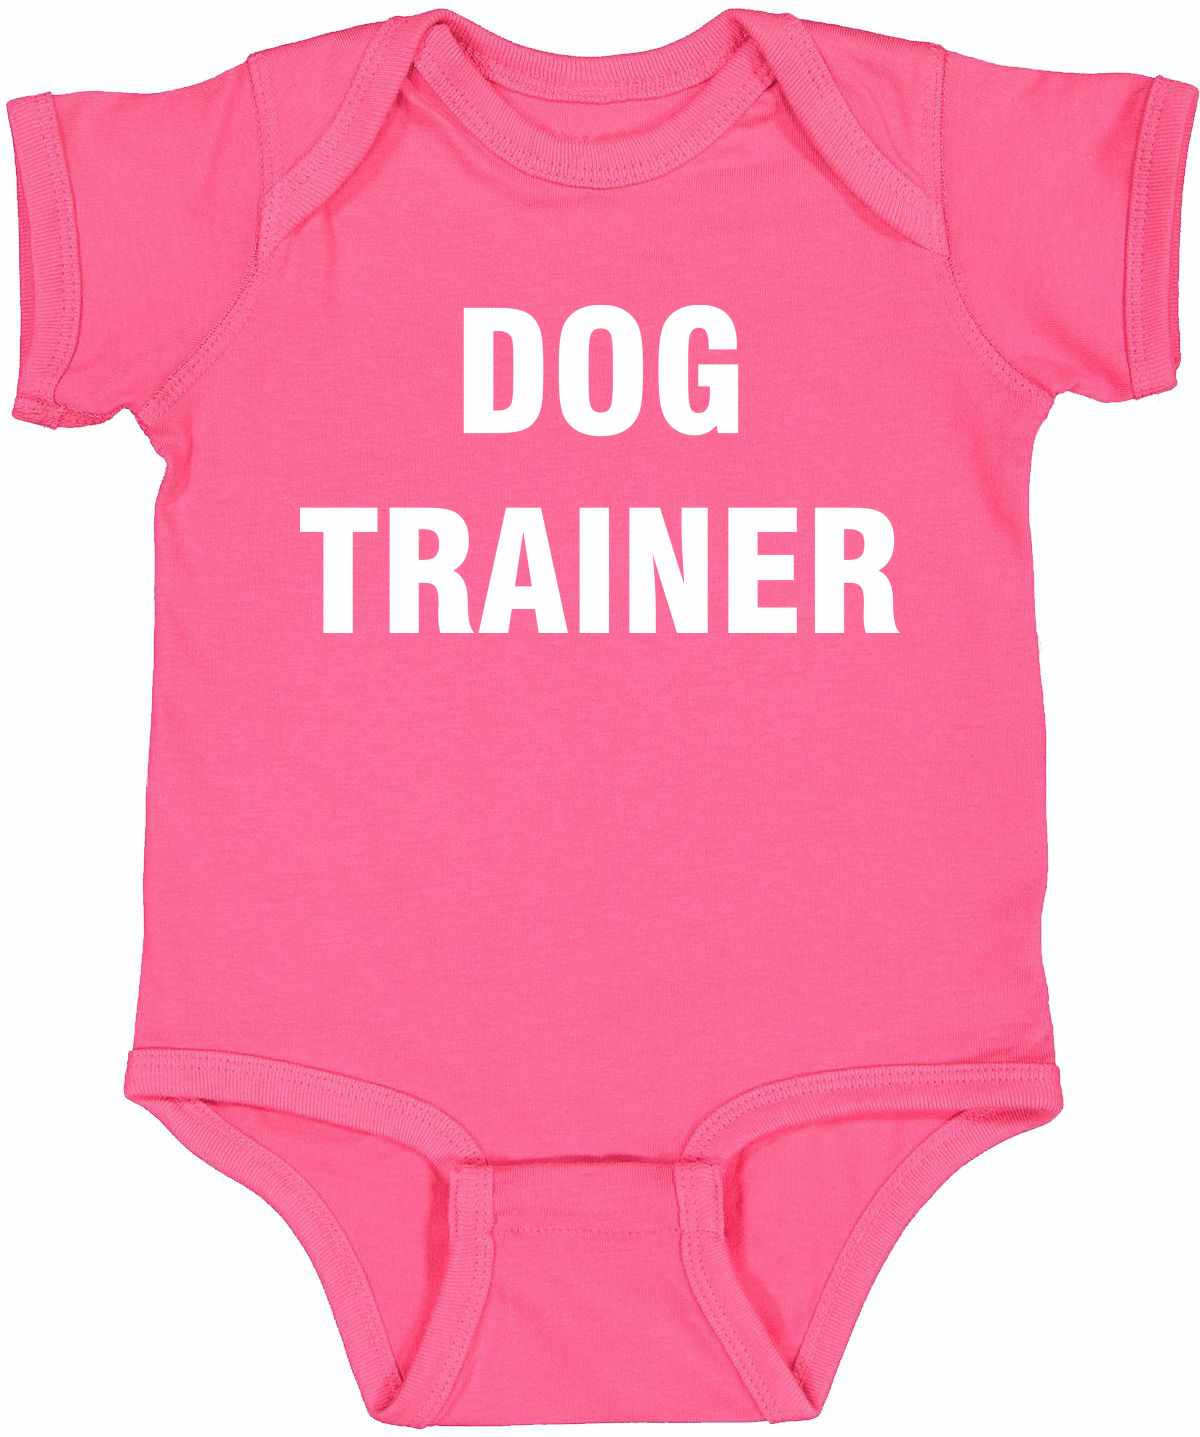 DOG TRAINER on Infant BodySuit (#239-10)